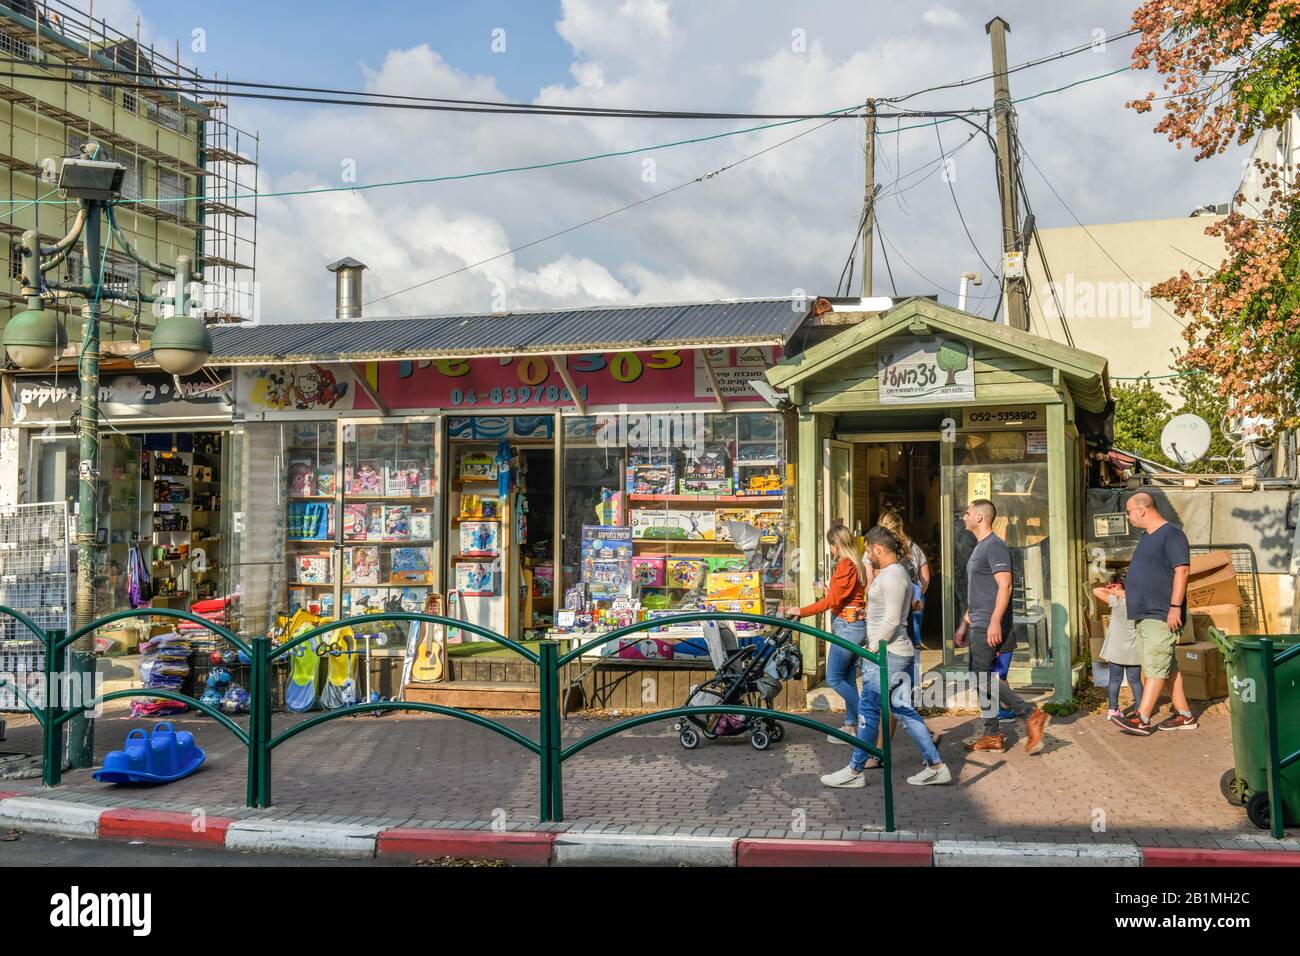 Ramschladen, Wochenmarkt, Drusendorf Daliyat al-Karmel, Karmelgebierge, Israel Stock Photo